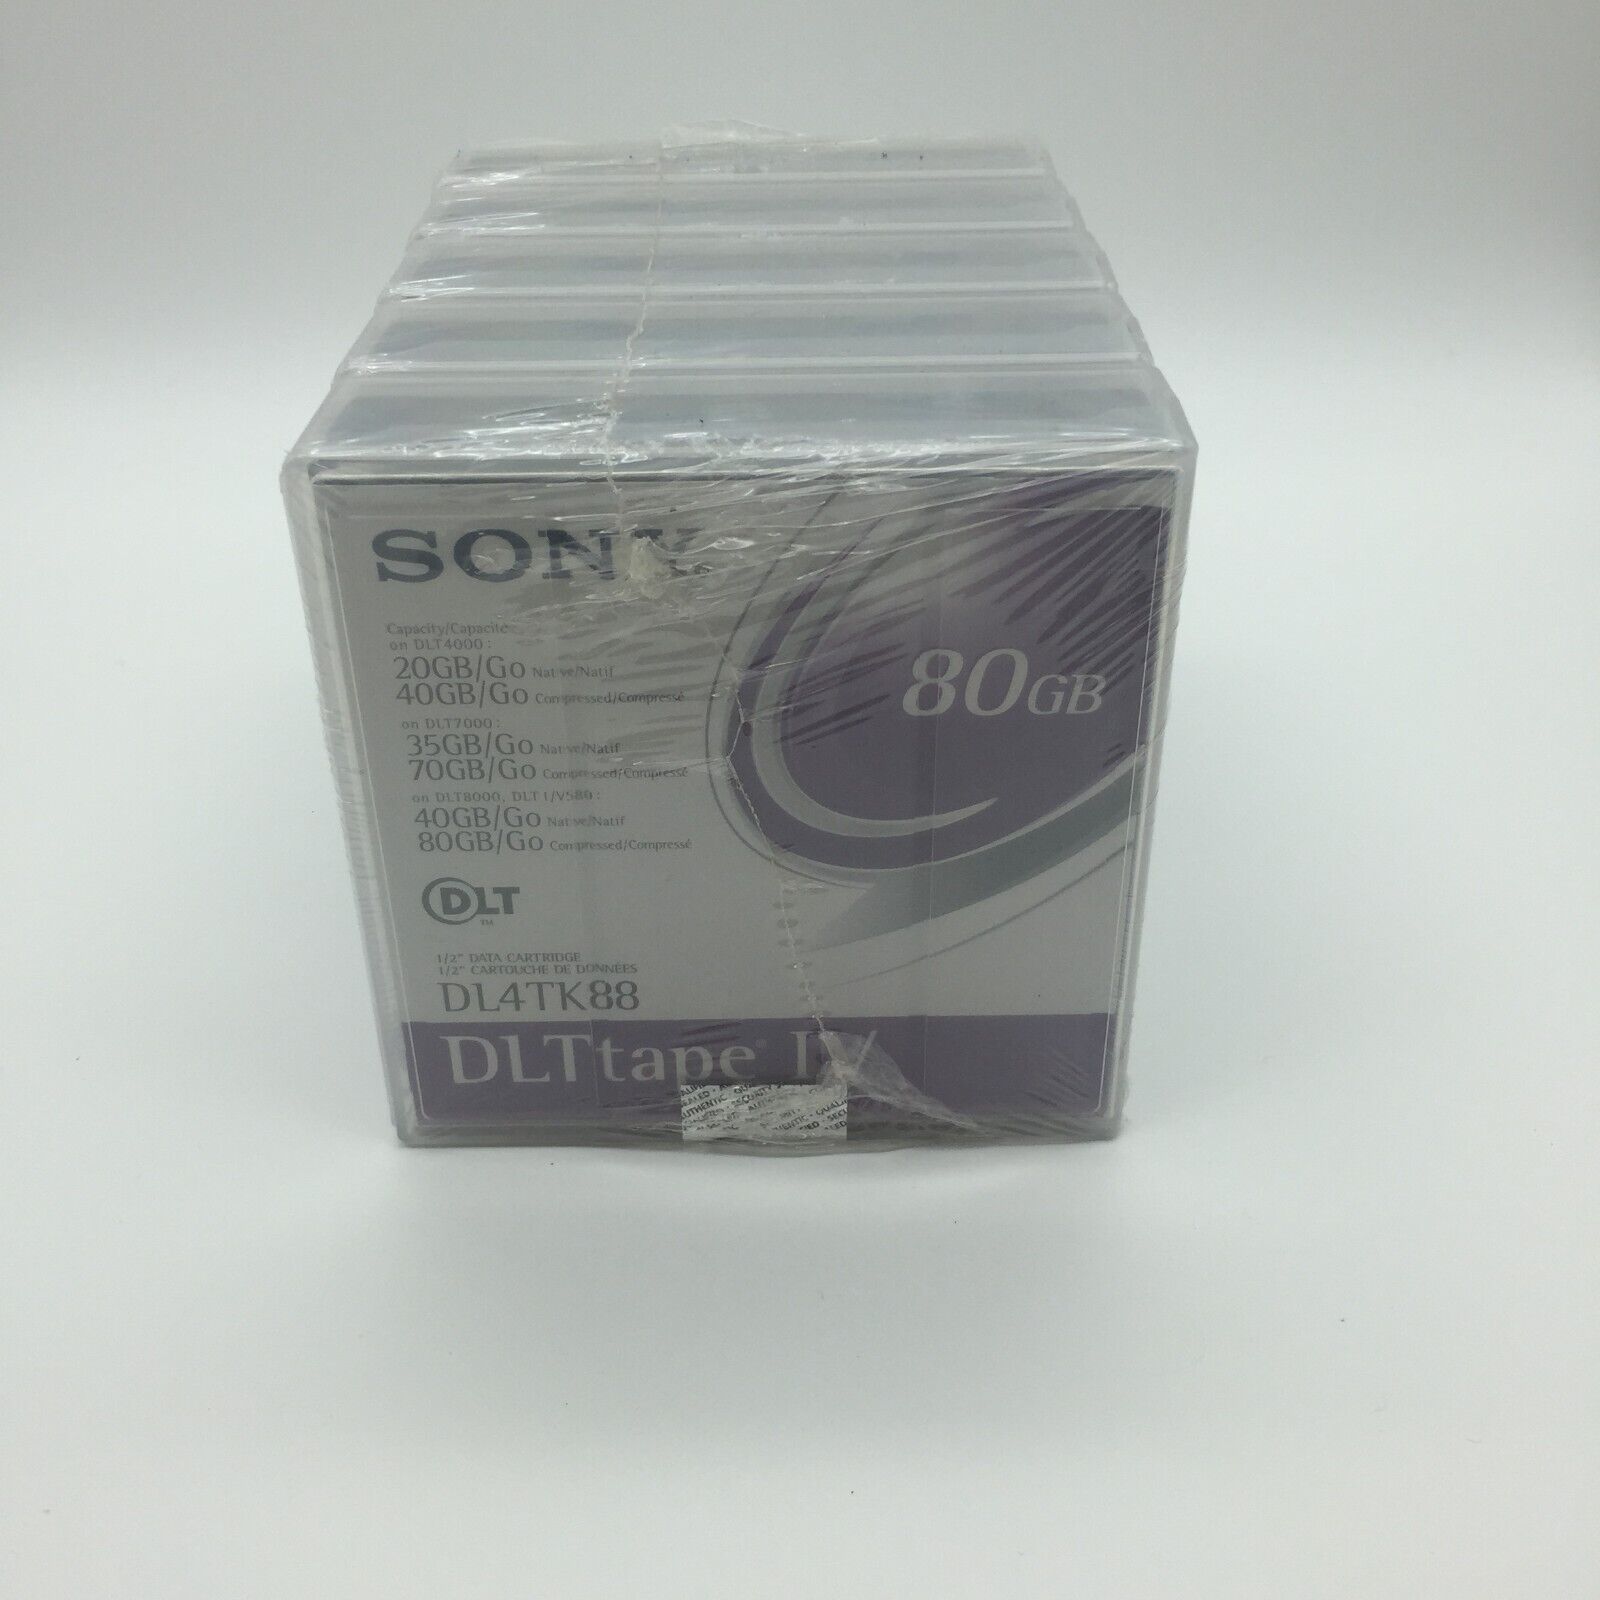 New Sealed Sony DLT Backup Data Tapes 80GB DL4TK88 5 Pack 